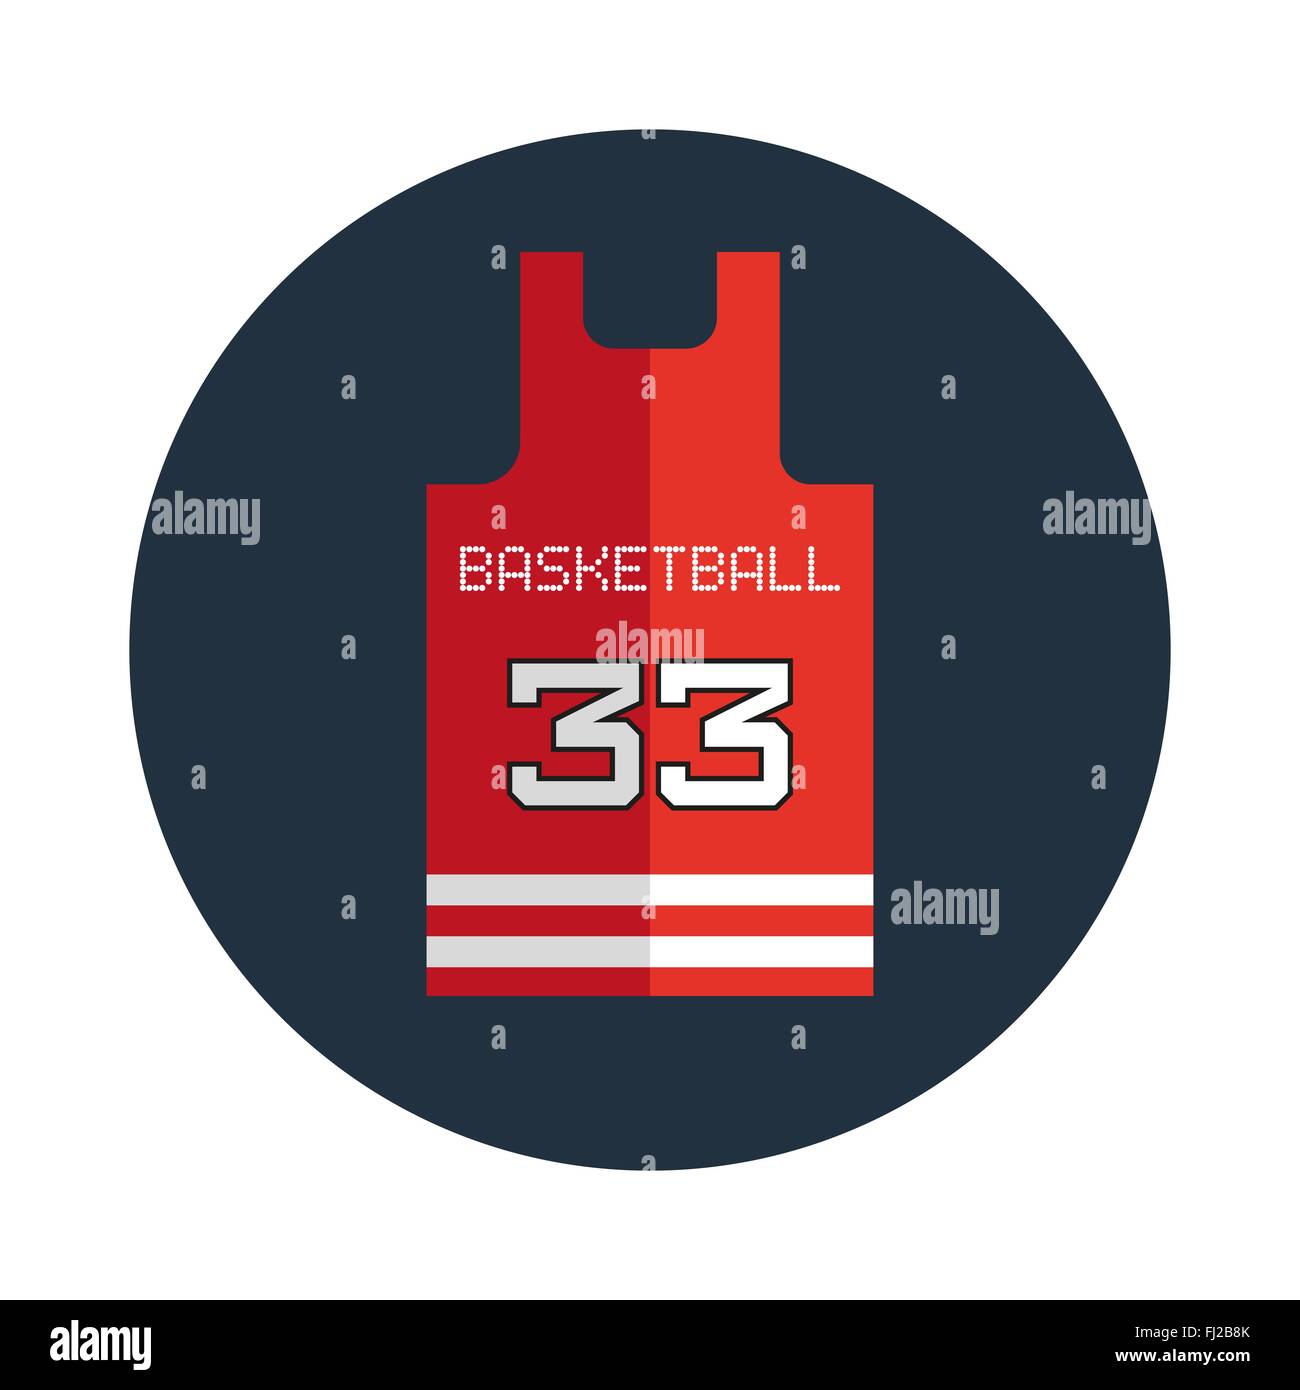 Basketball tshirt design templates Vectors & Illustrations for